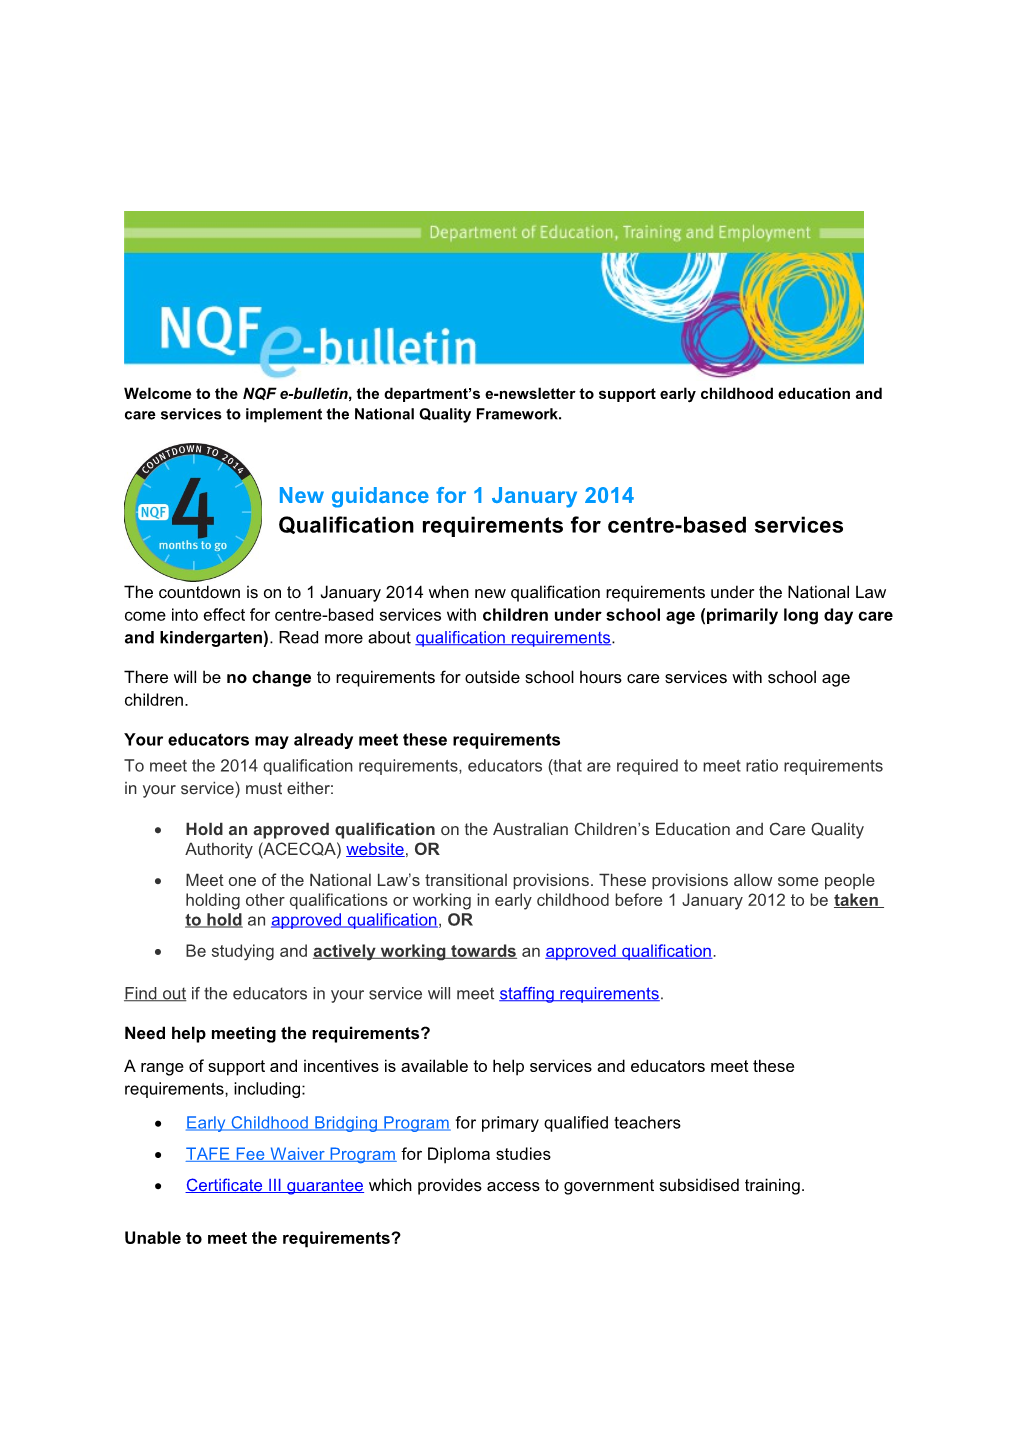 NQF E-Bulletin - New Guidance for 1 January 2014